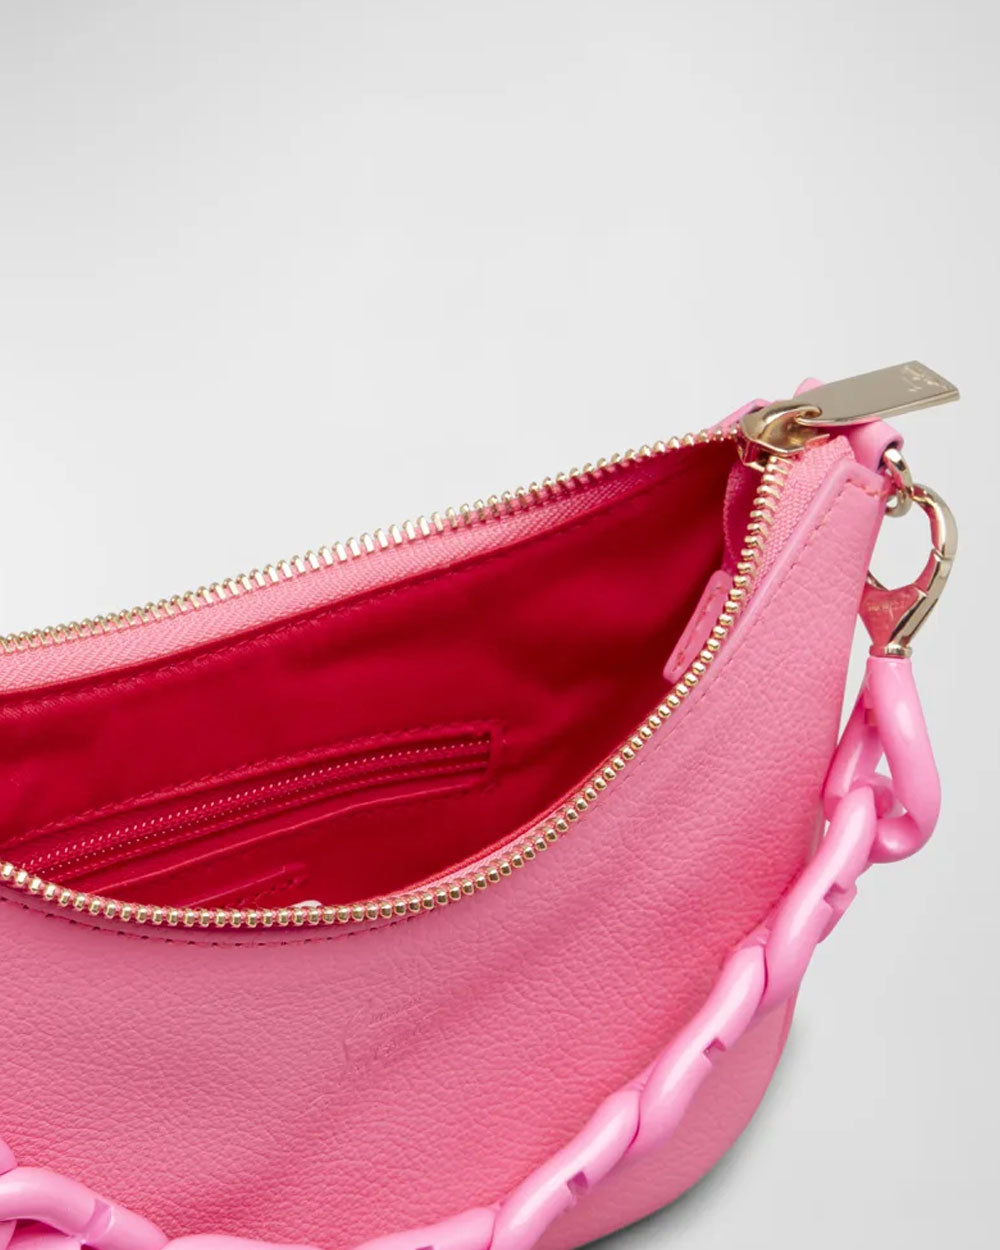 Loubila Mini Chain Leather Shoulder Bag in Neon Pink